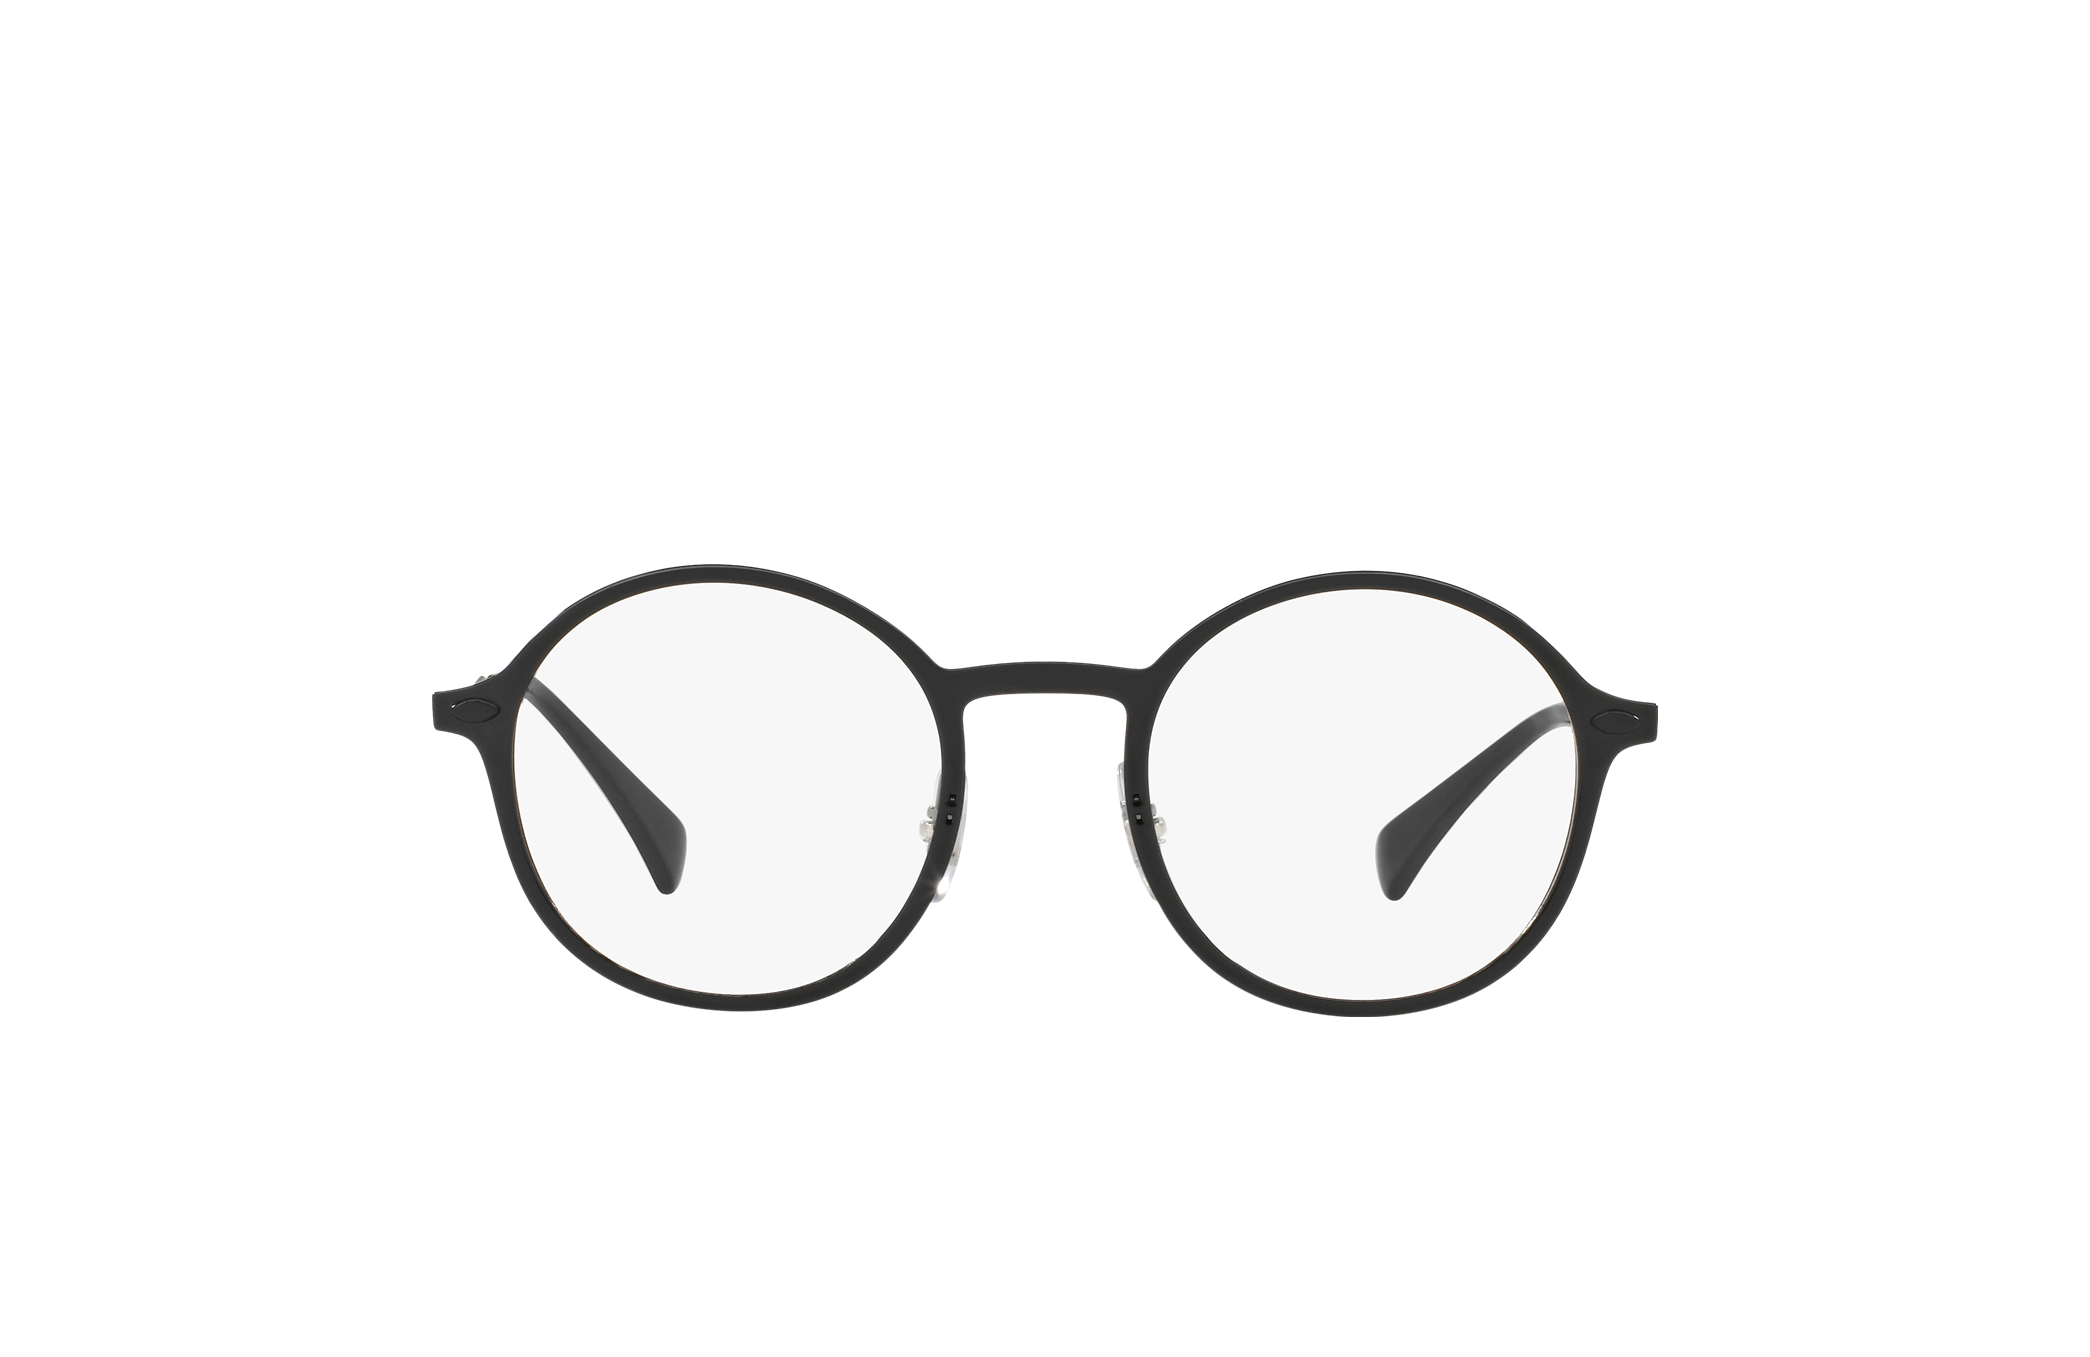 Rb7087 Optics Eyeglasses with Black Frame | Ray-Ban®